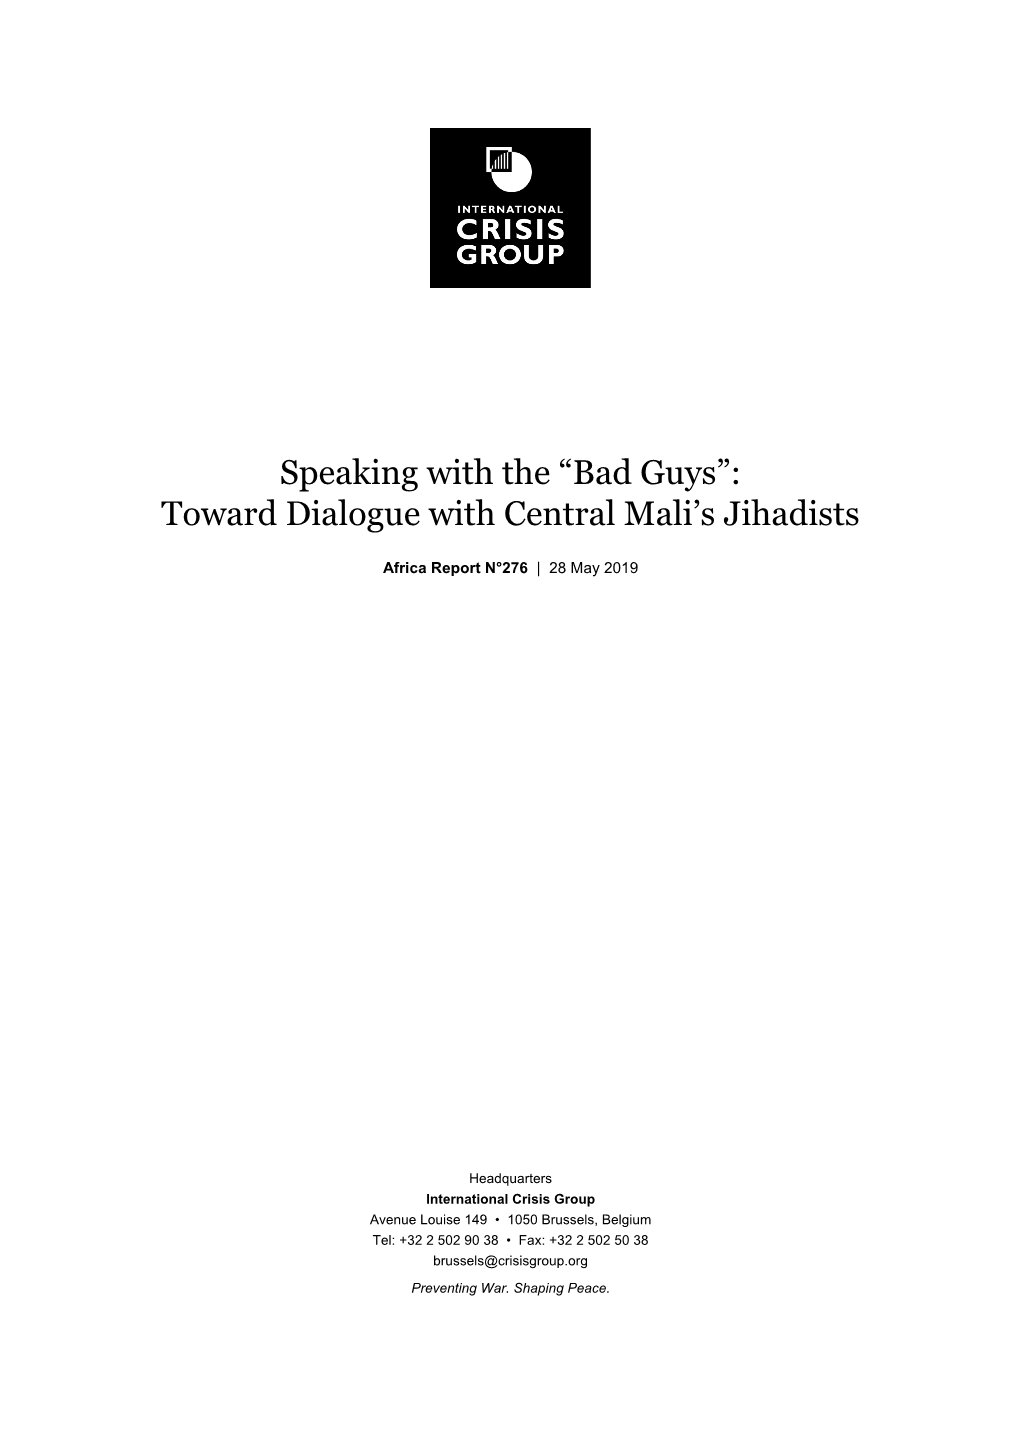 "Bad Guys": Towards Dialogue with Central Mali's Jihadists